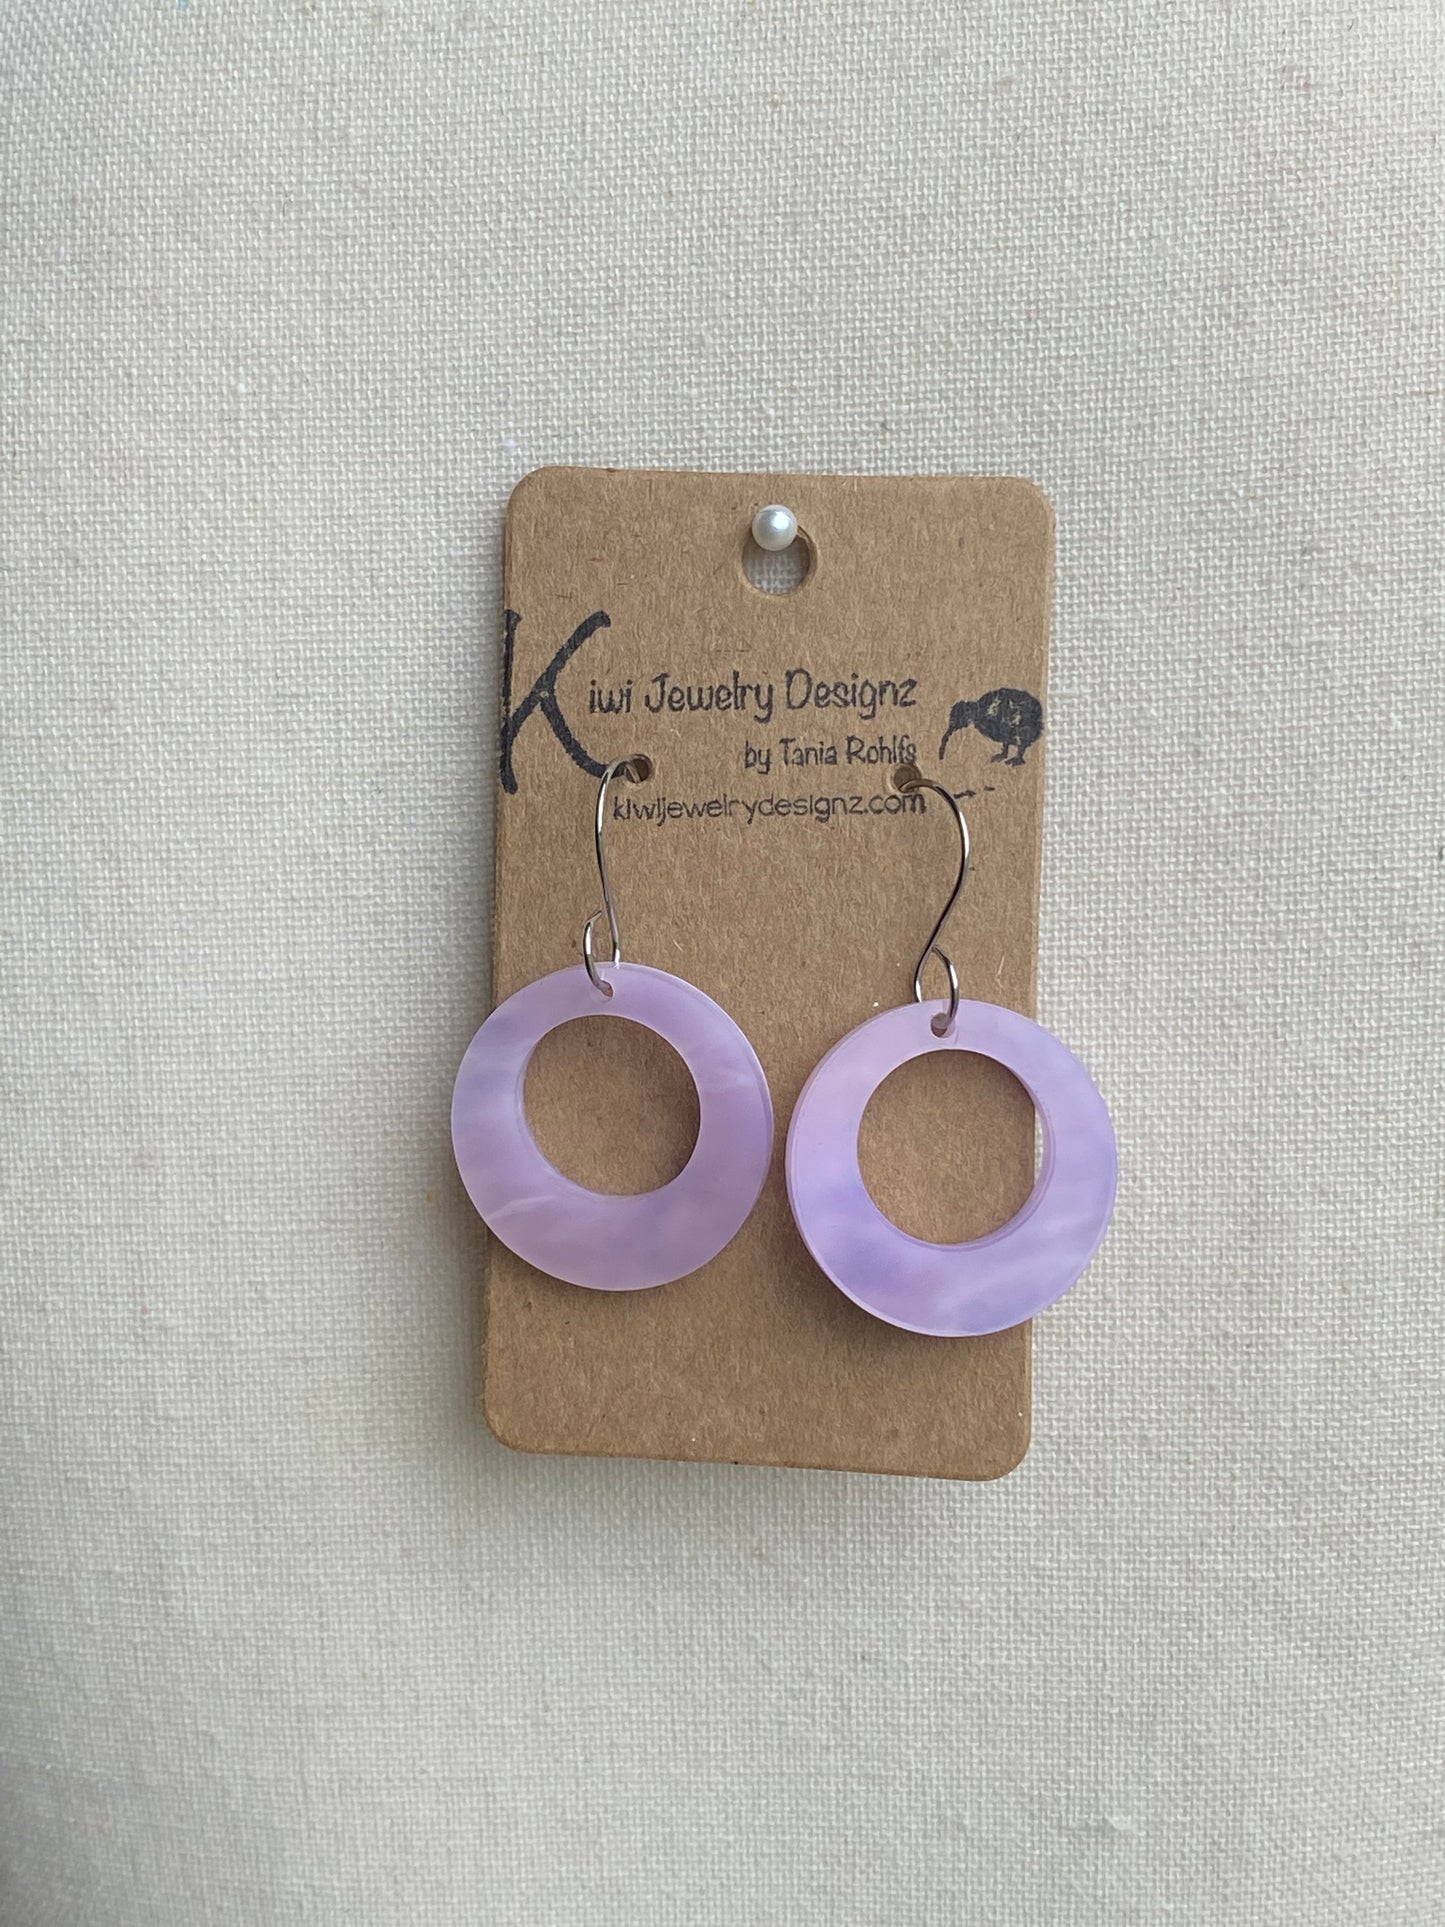 Kiwi Jewelry Designz - Acrylic Earrings